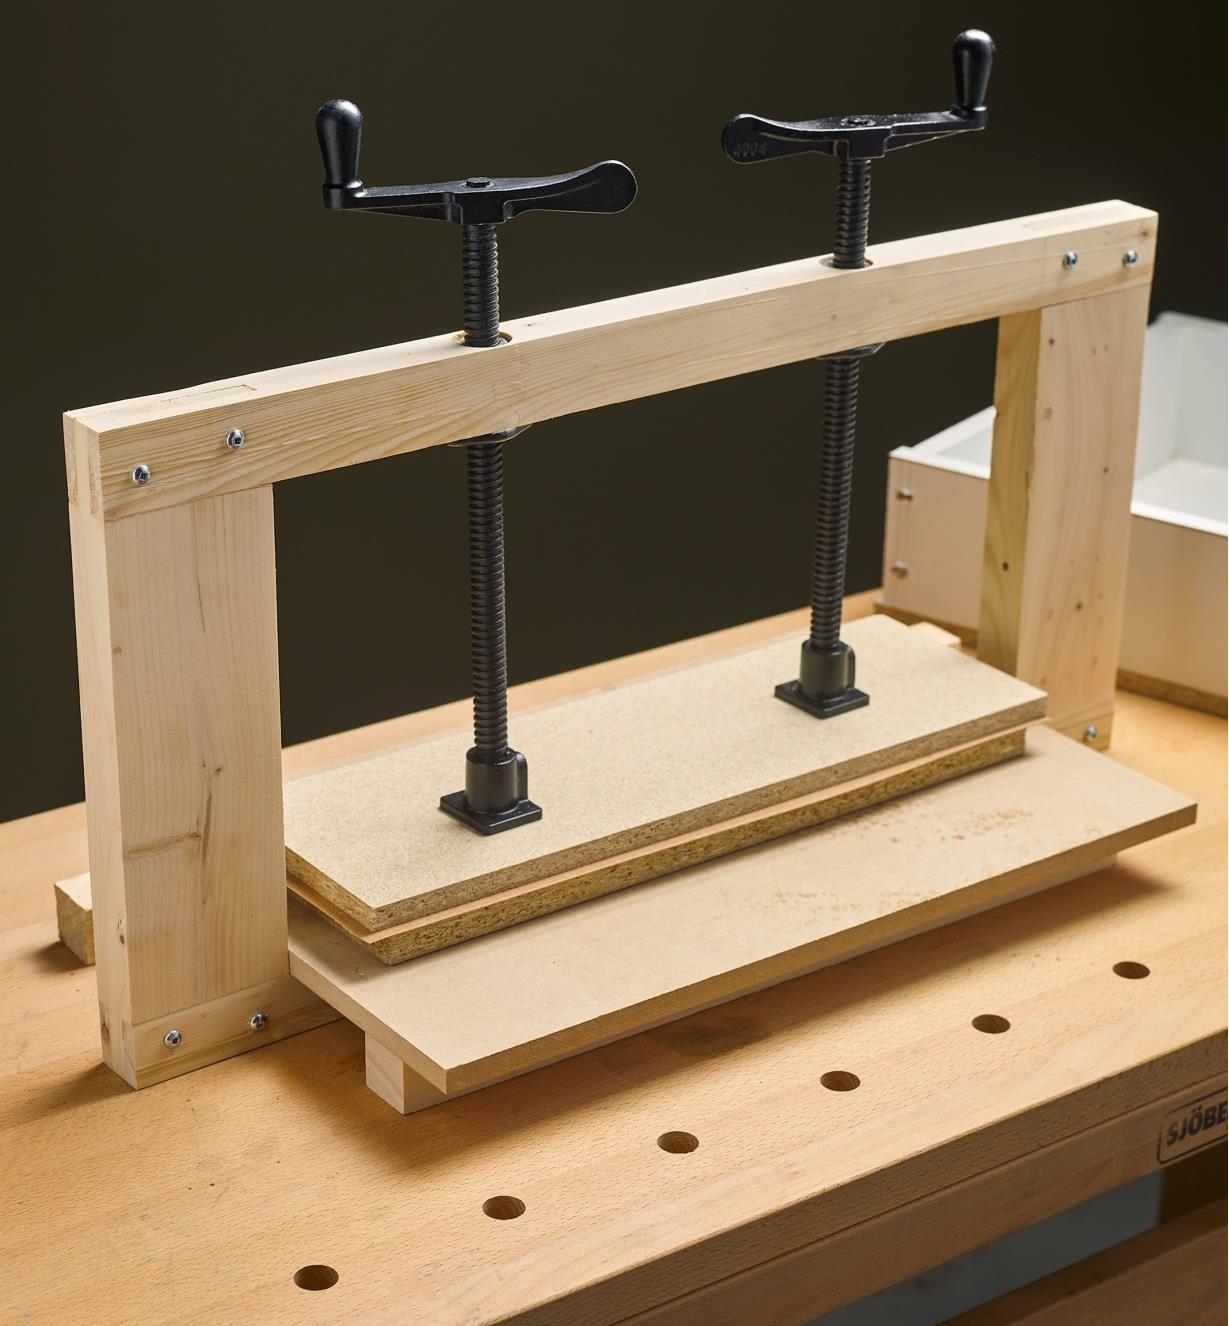 A veneer press with two press screws